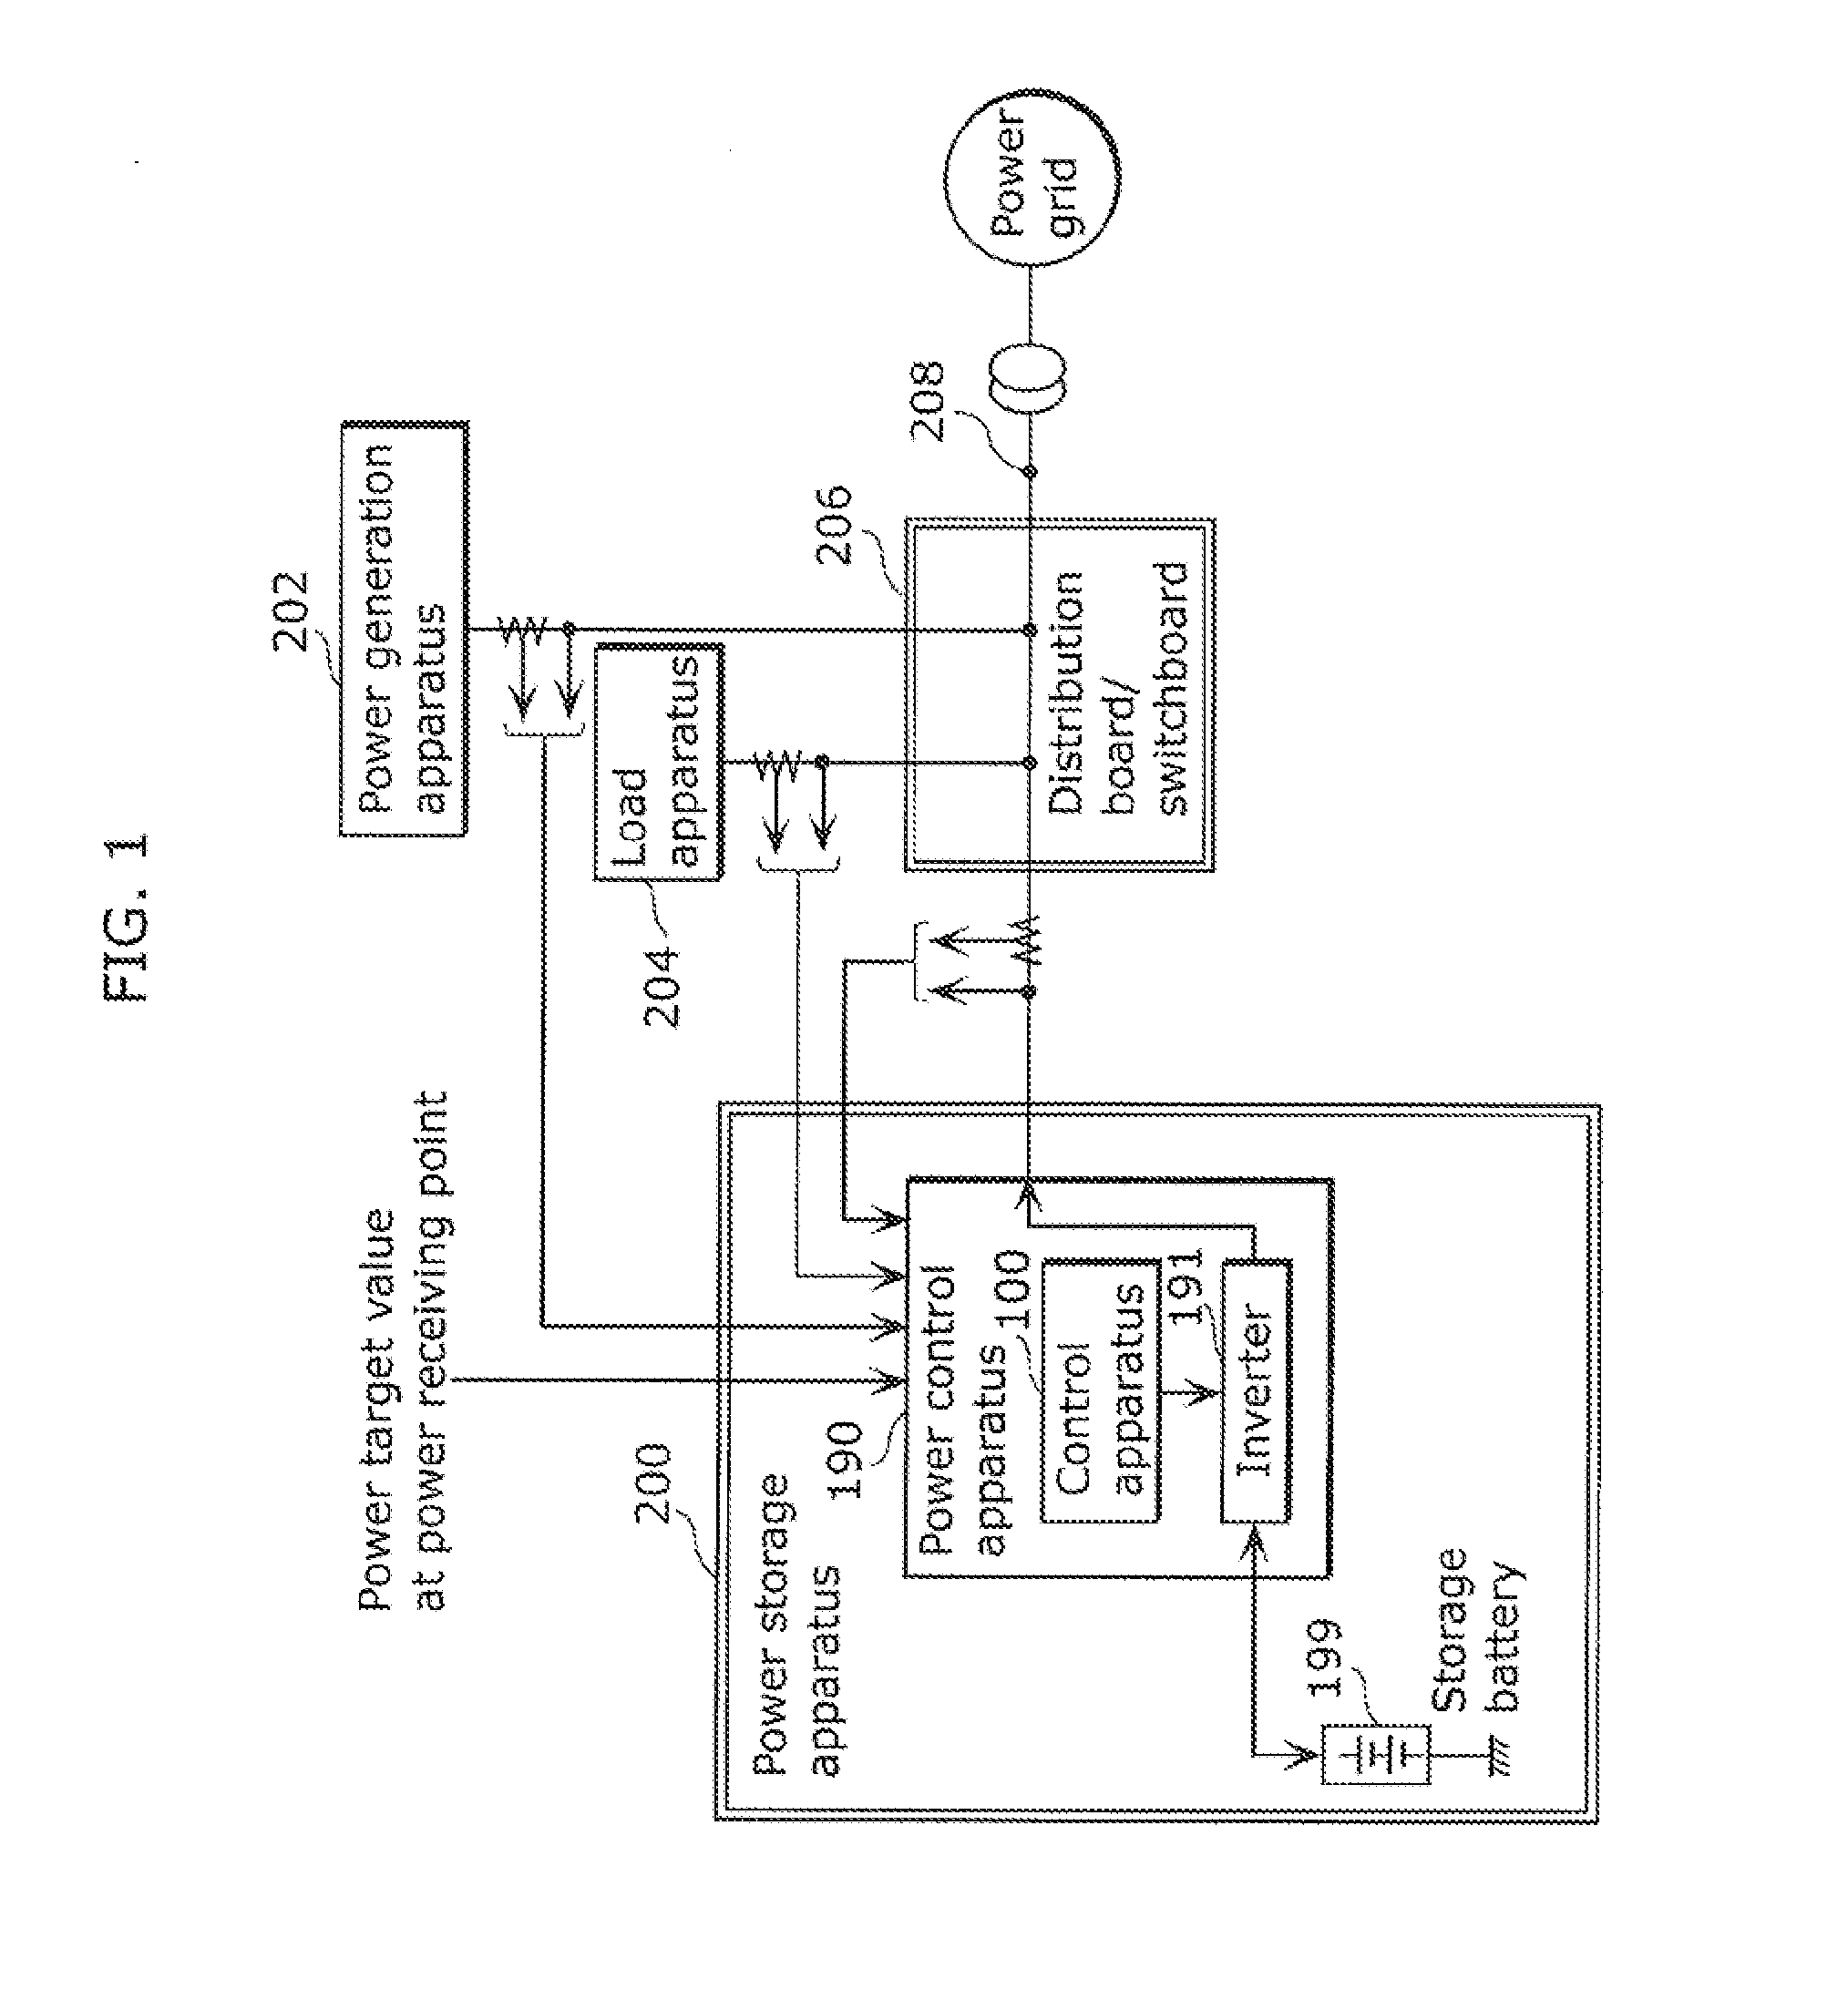 Method for designing a control apparatus and control apparatus